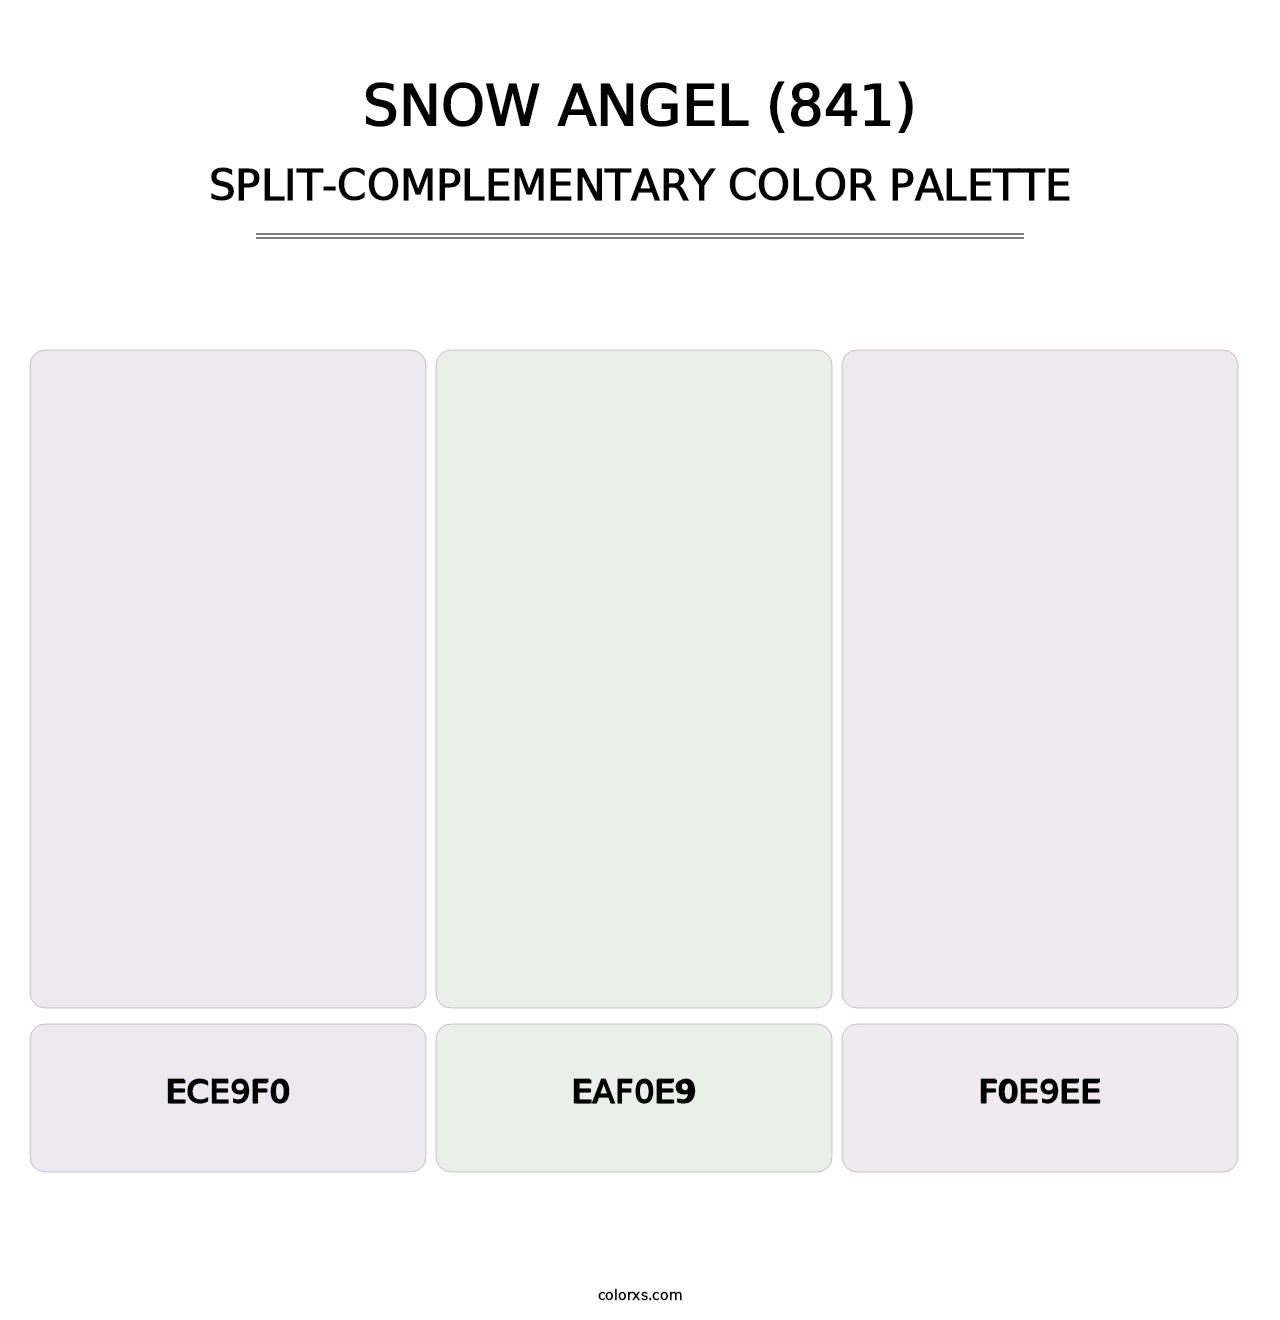 Snow Angel (841) - Split-Complementary Color Palette